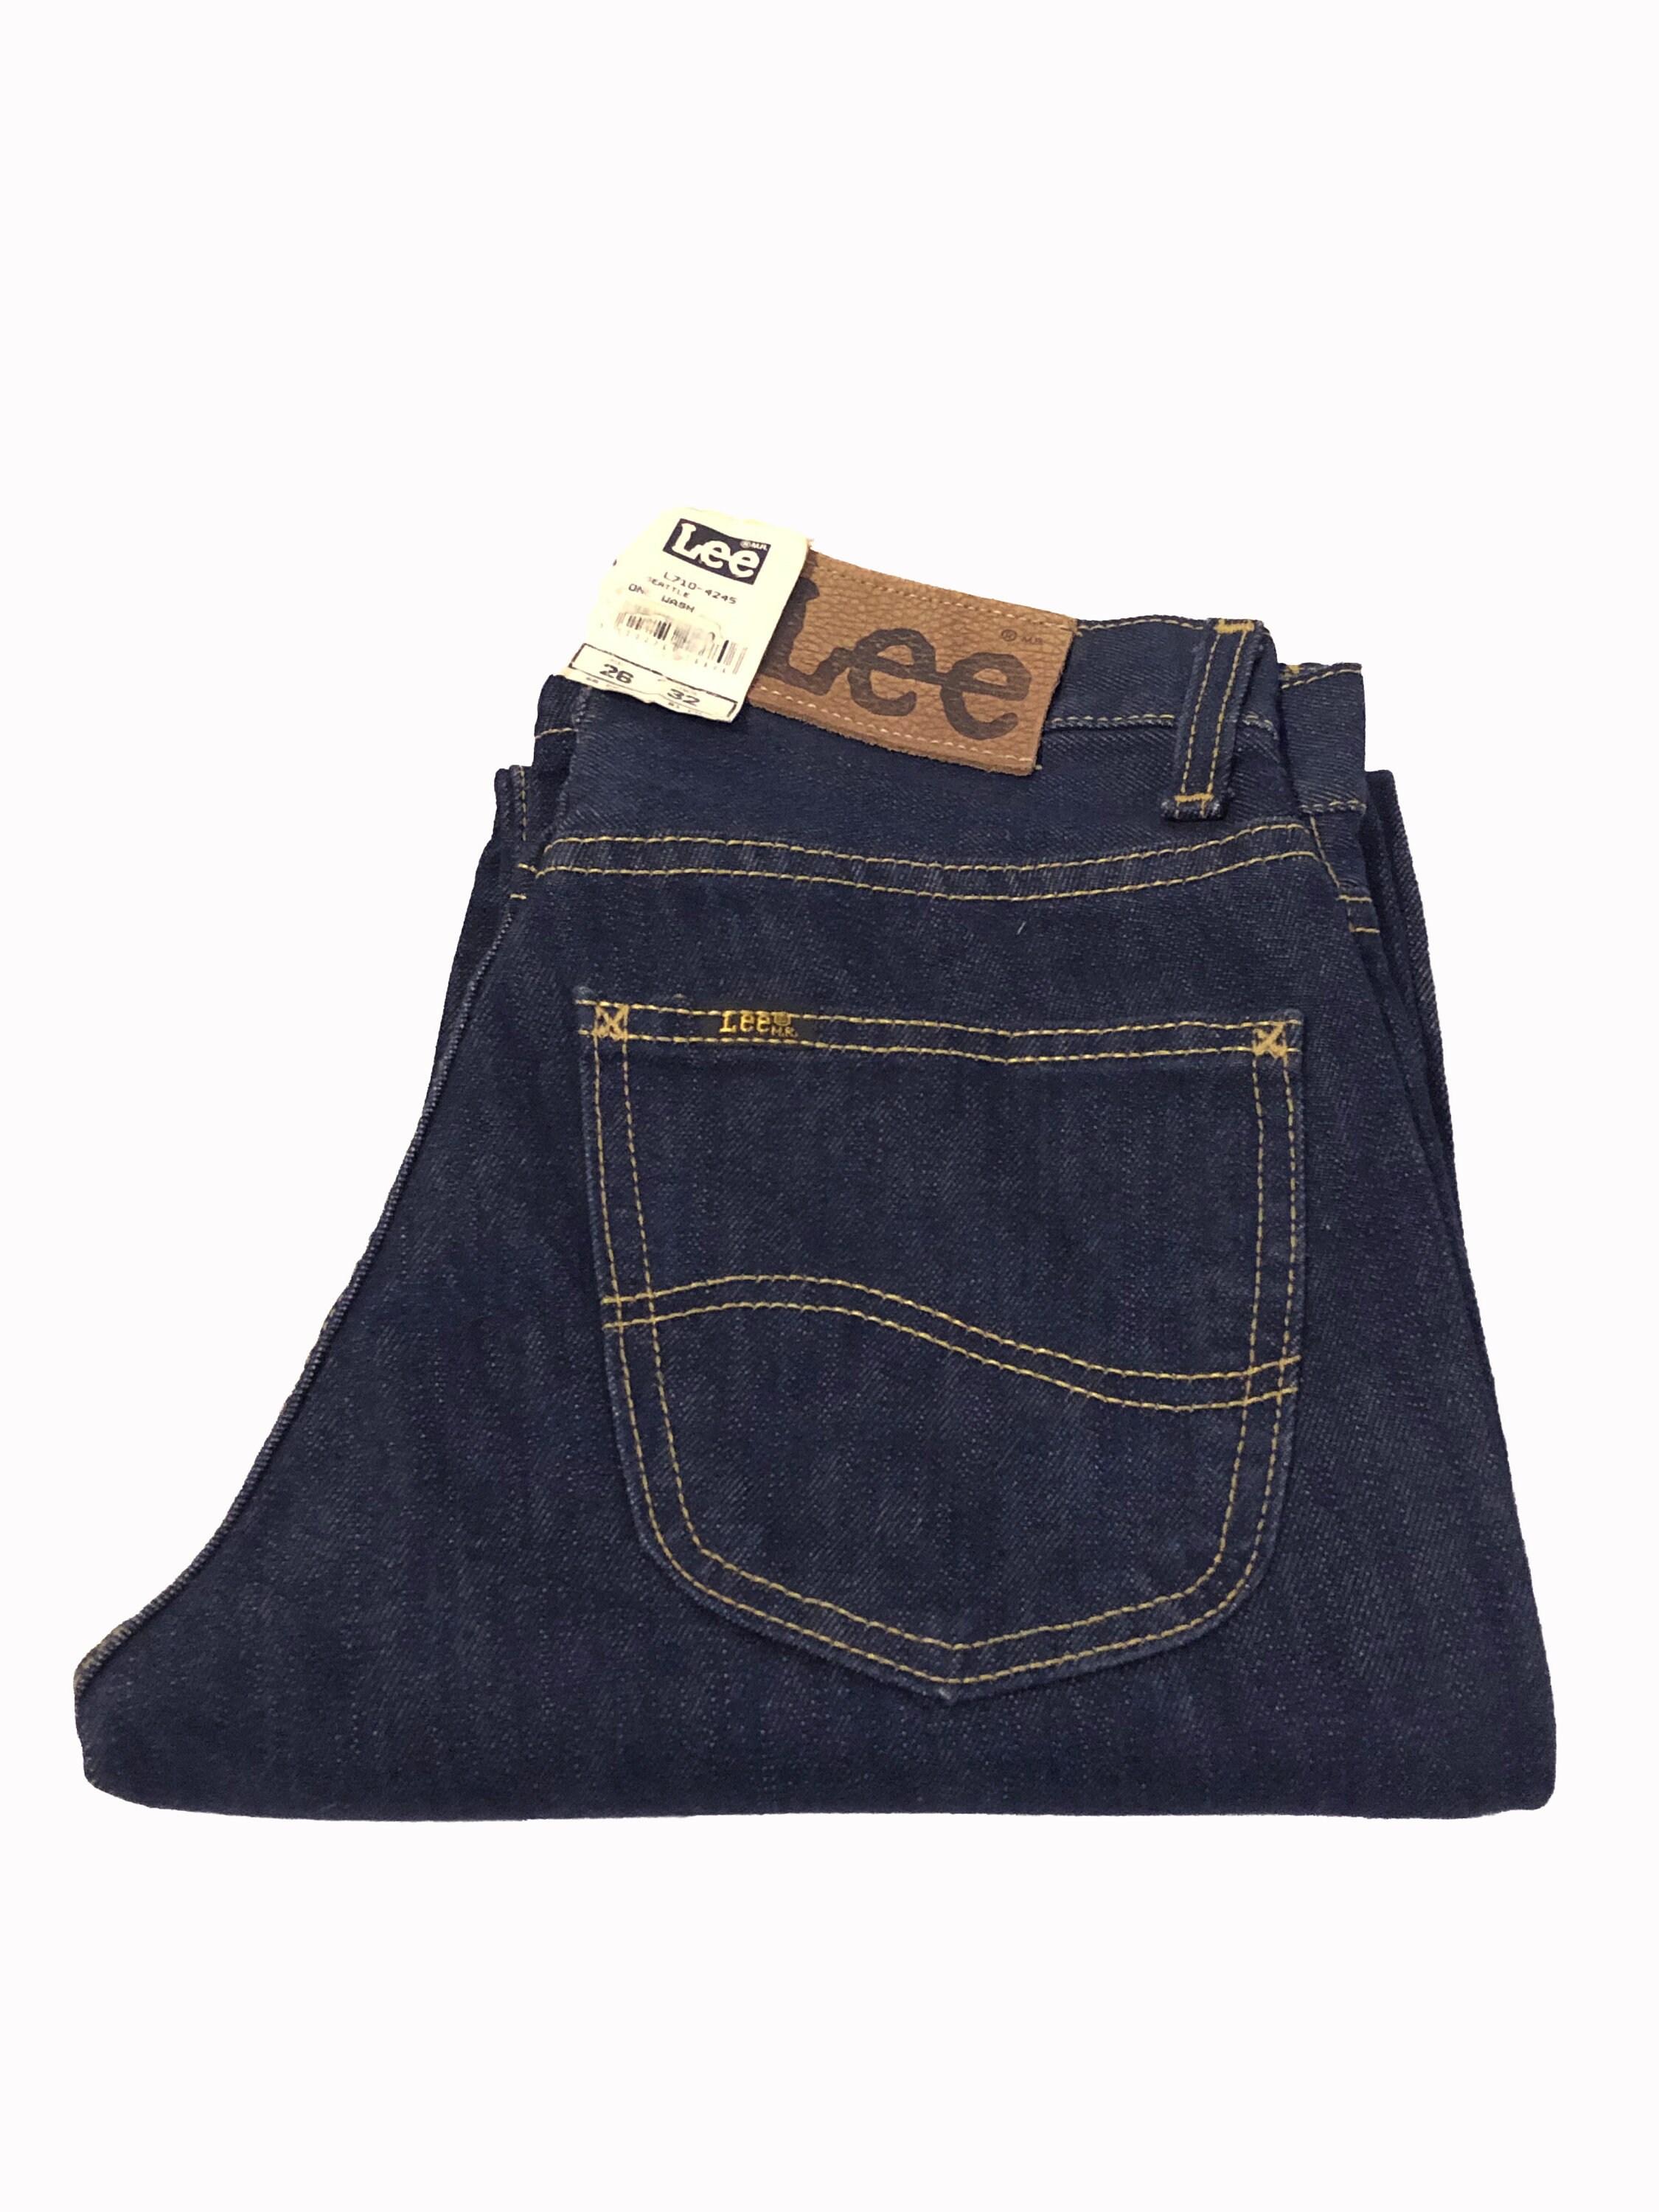 Vintage Lee Blue Jeans Size W26L32 Etsy